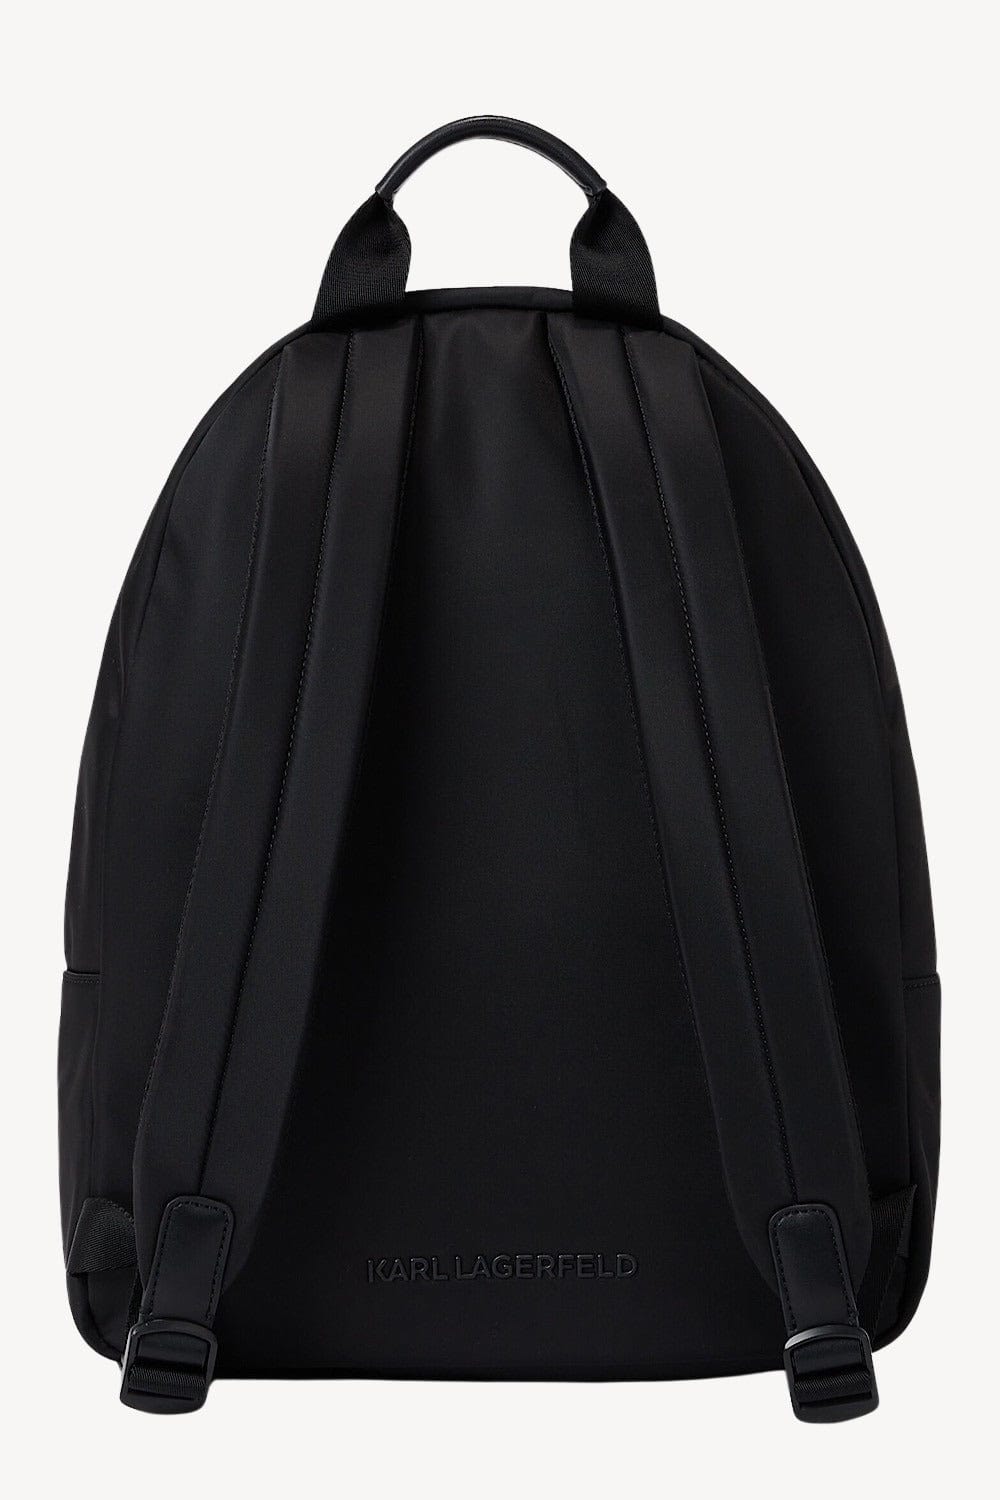 Karl Lagerfeld Paris Nylon Black Sherpa Patched Laptop Backpack Purse Large